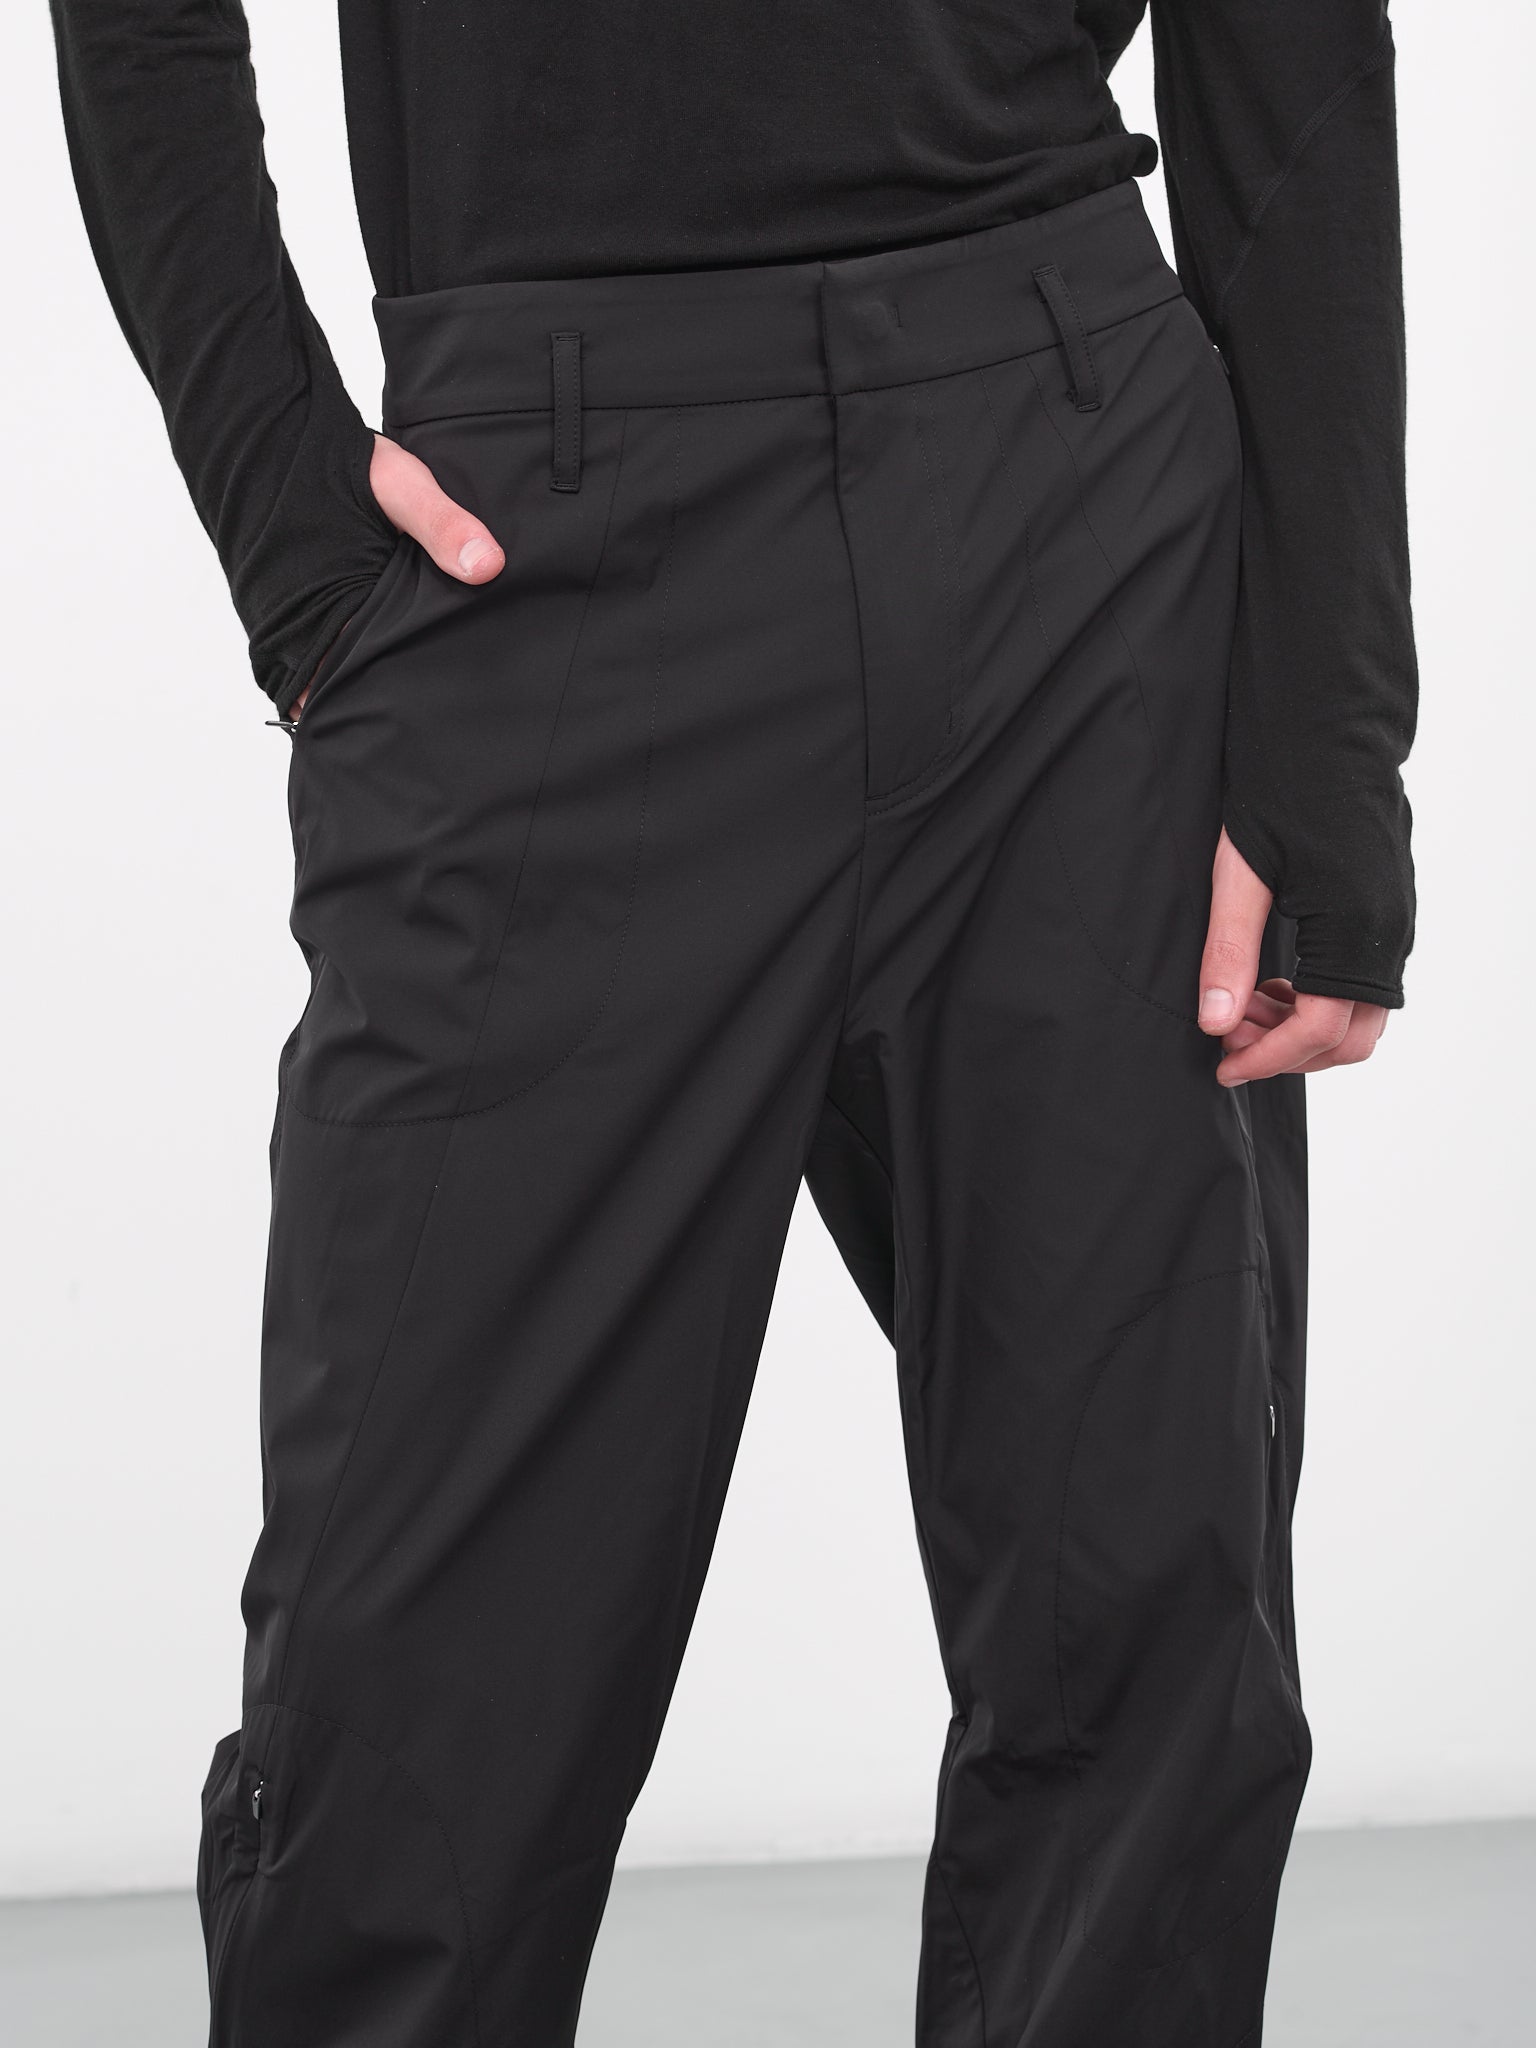 5.1 Center Trousers (BTCB-BLACK)